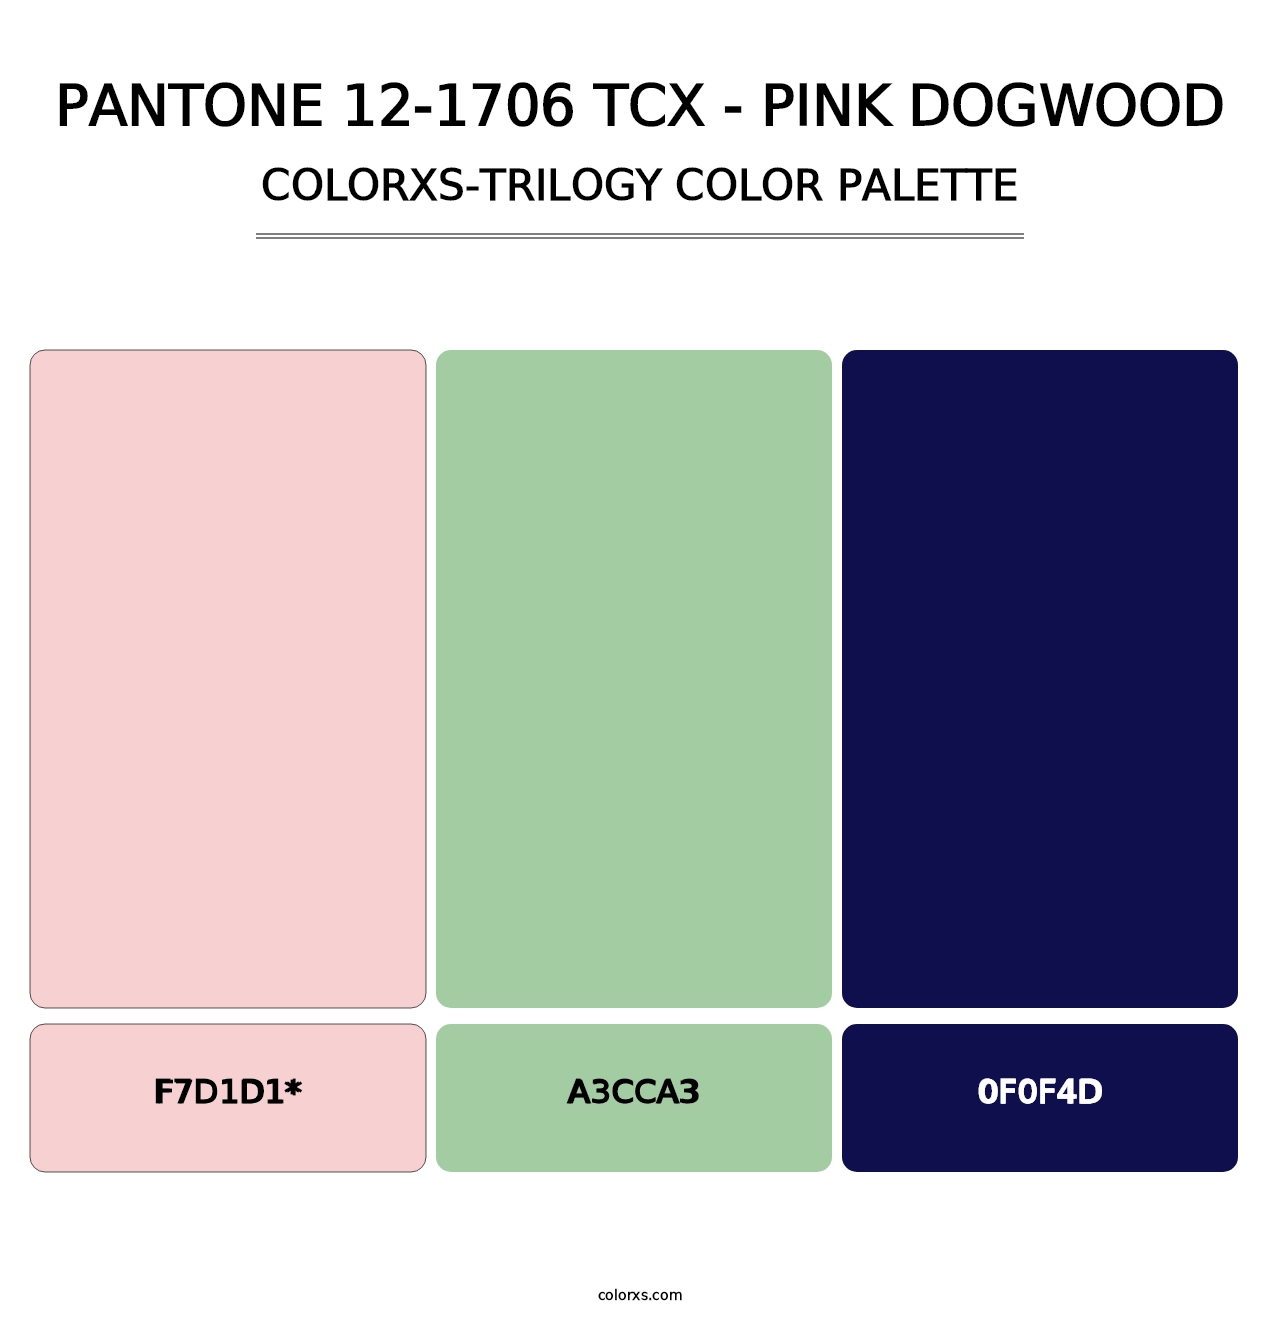 PANTONE 12-1706 TCX - Pink Dogwood - Colorxs Trilogy Palette